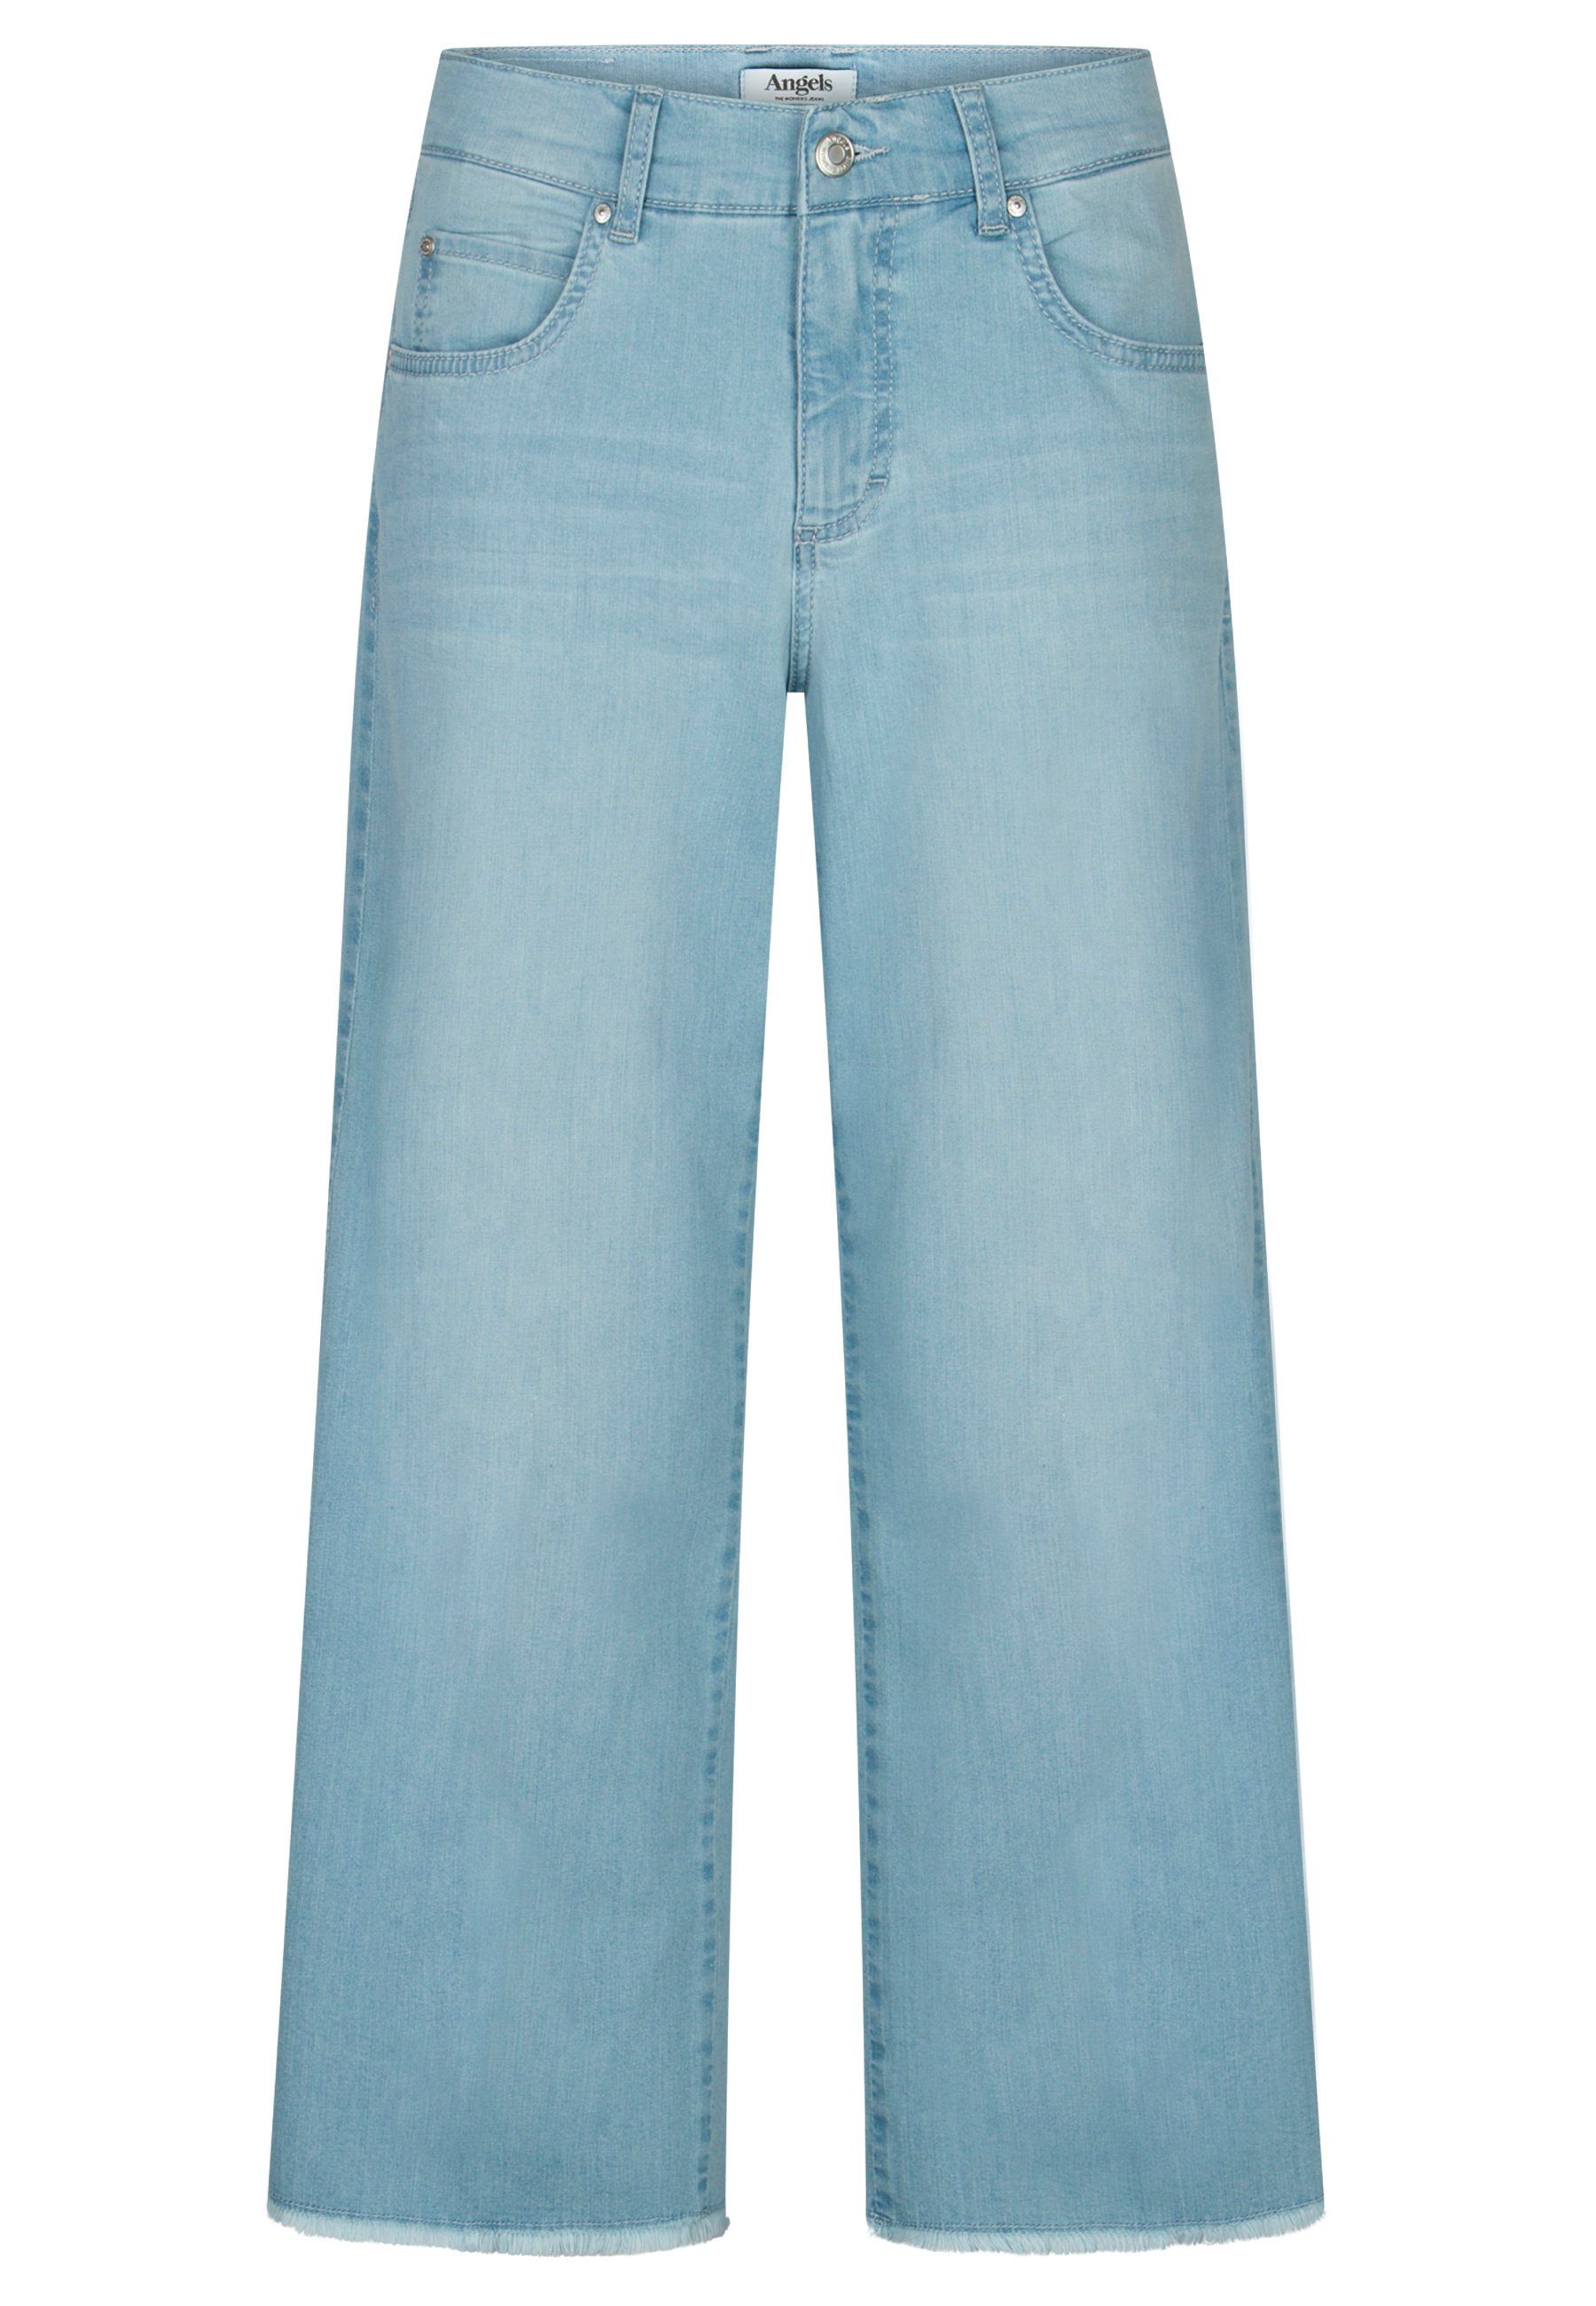 Jeans in 7/8-Jeans Fransen Linn mit Fringe ANGELS Used-Look